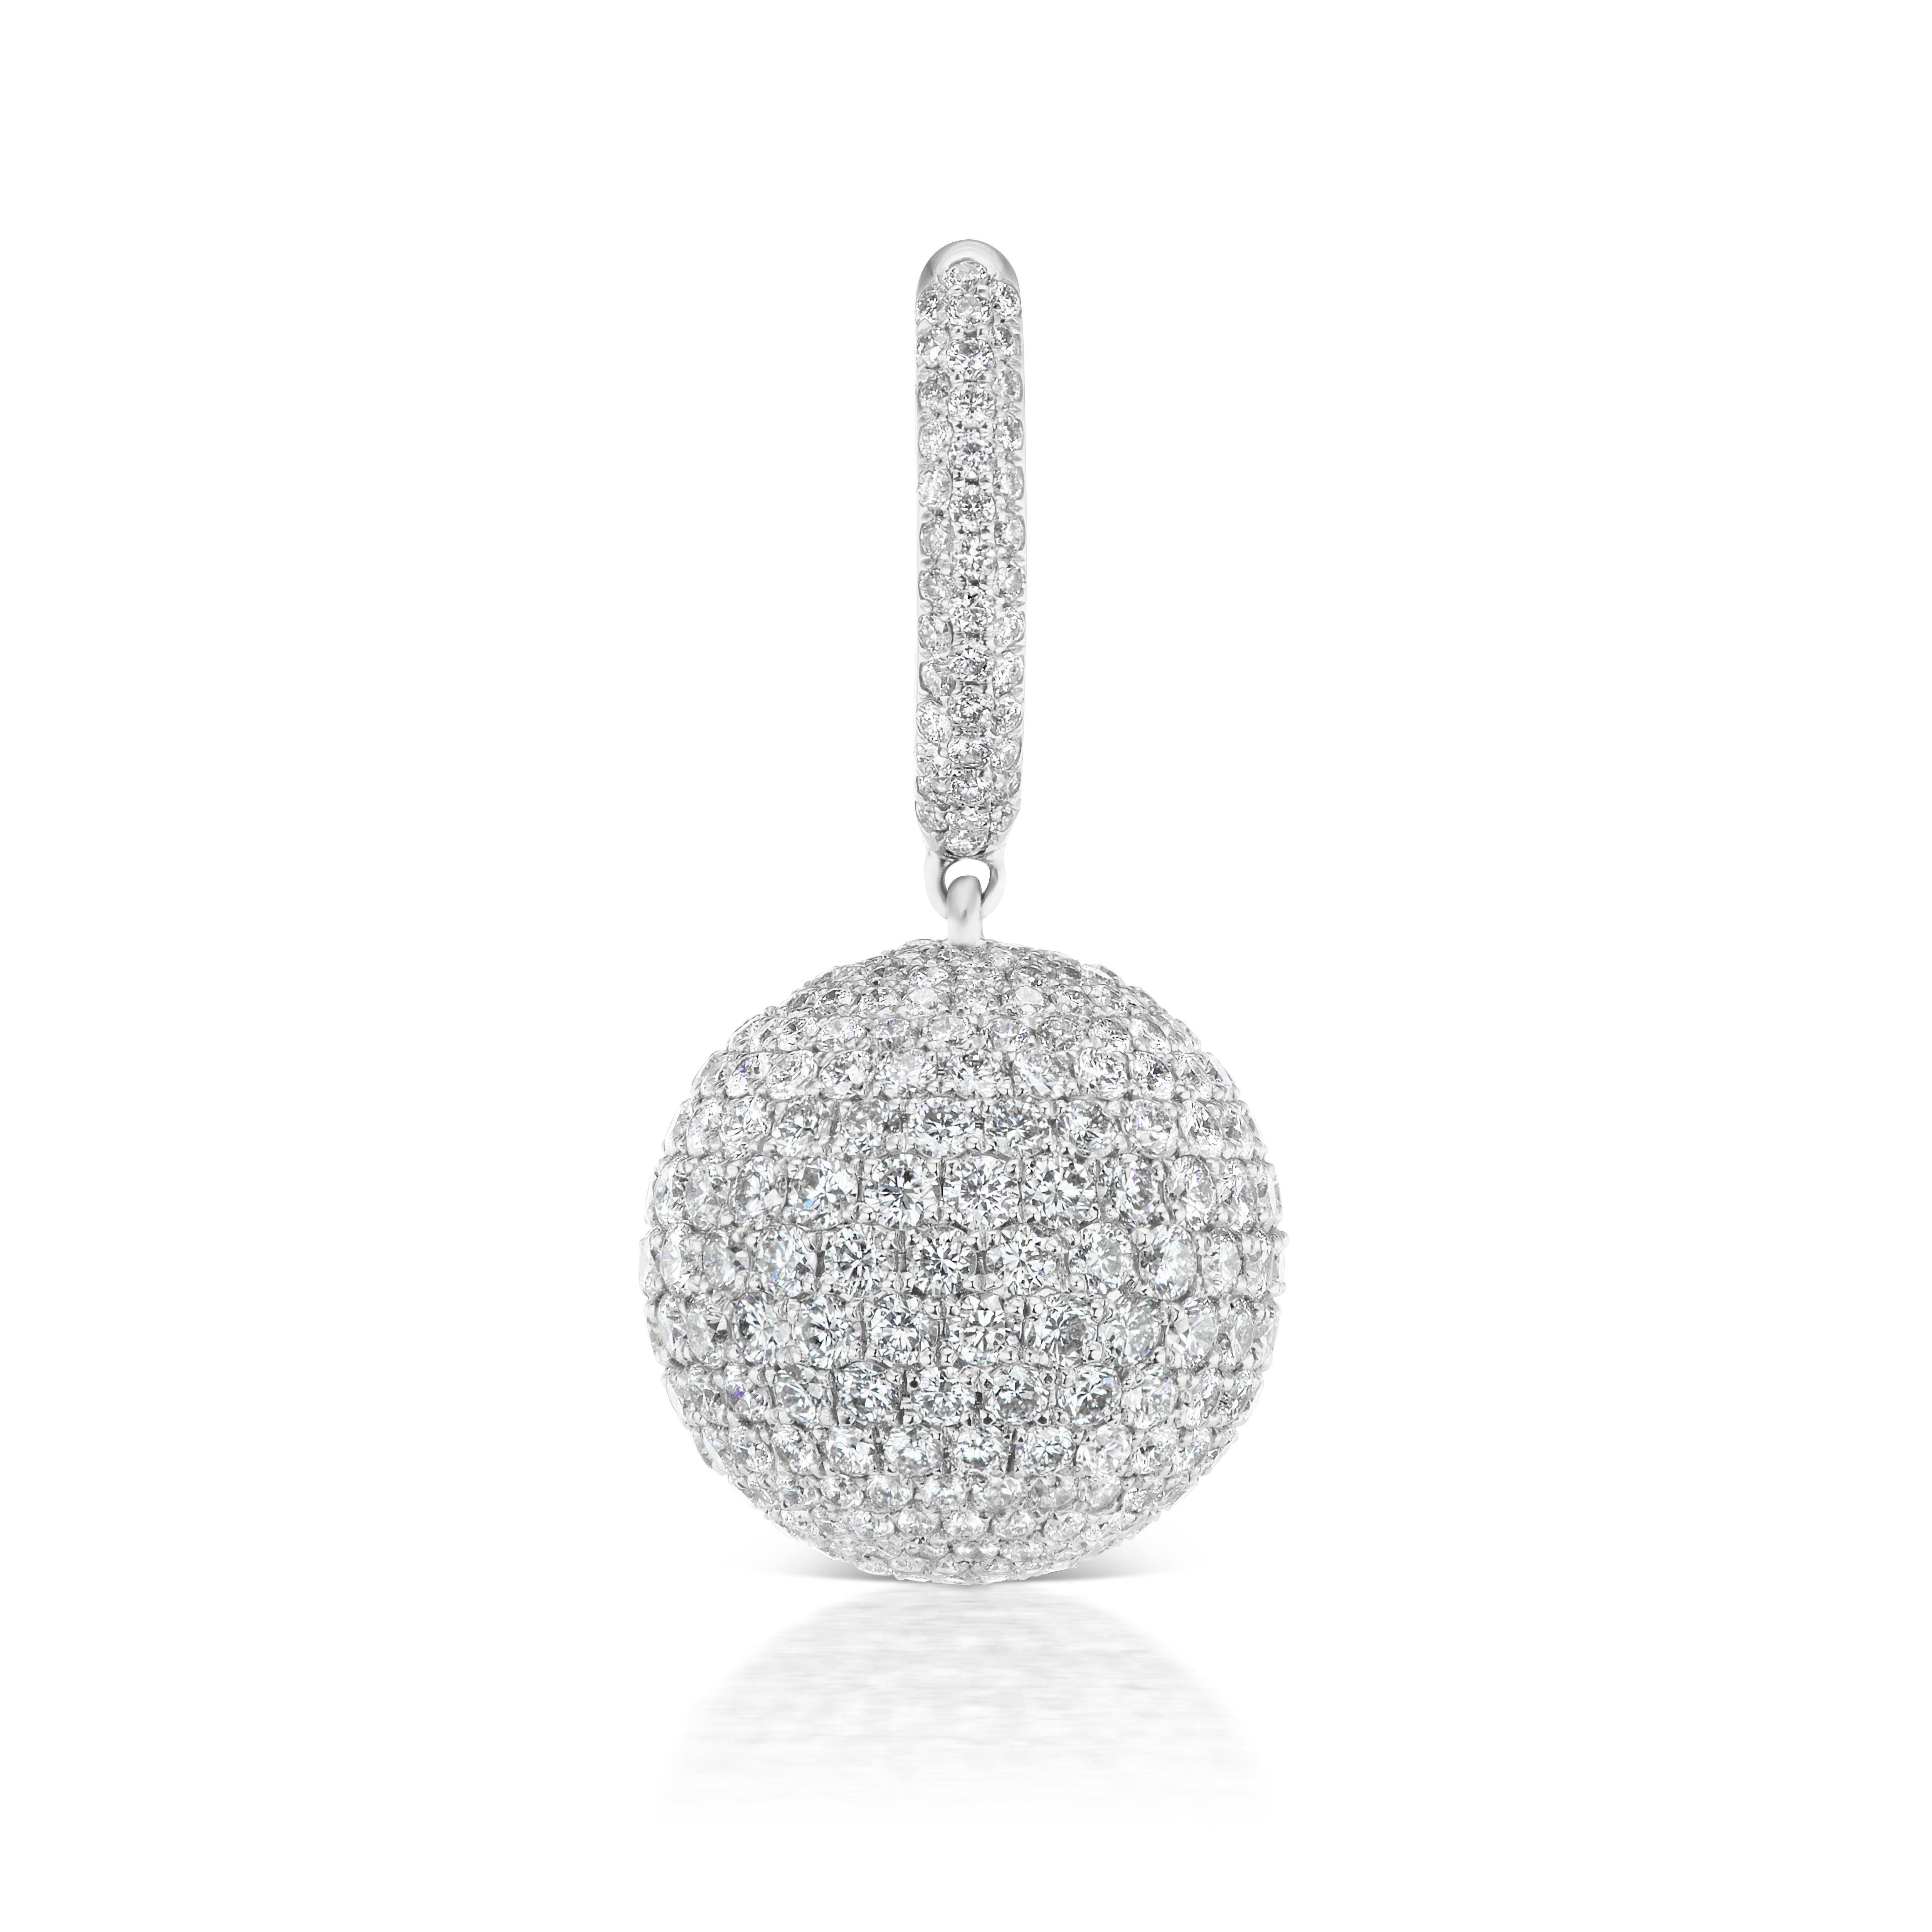 18K White Gold Pave Ball diamond earrings on diamond wires.
Post only.
5.33 Carat TW white diamonds.
1